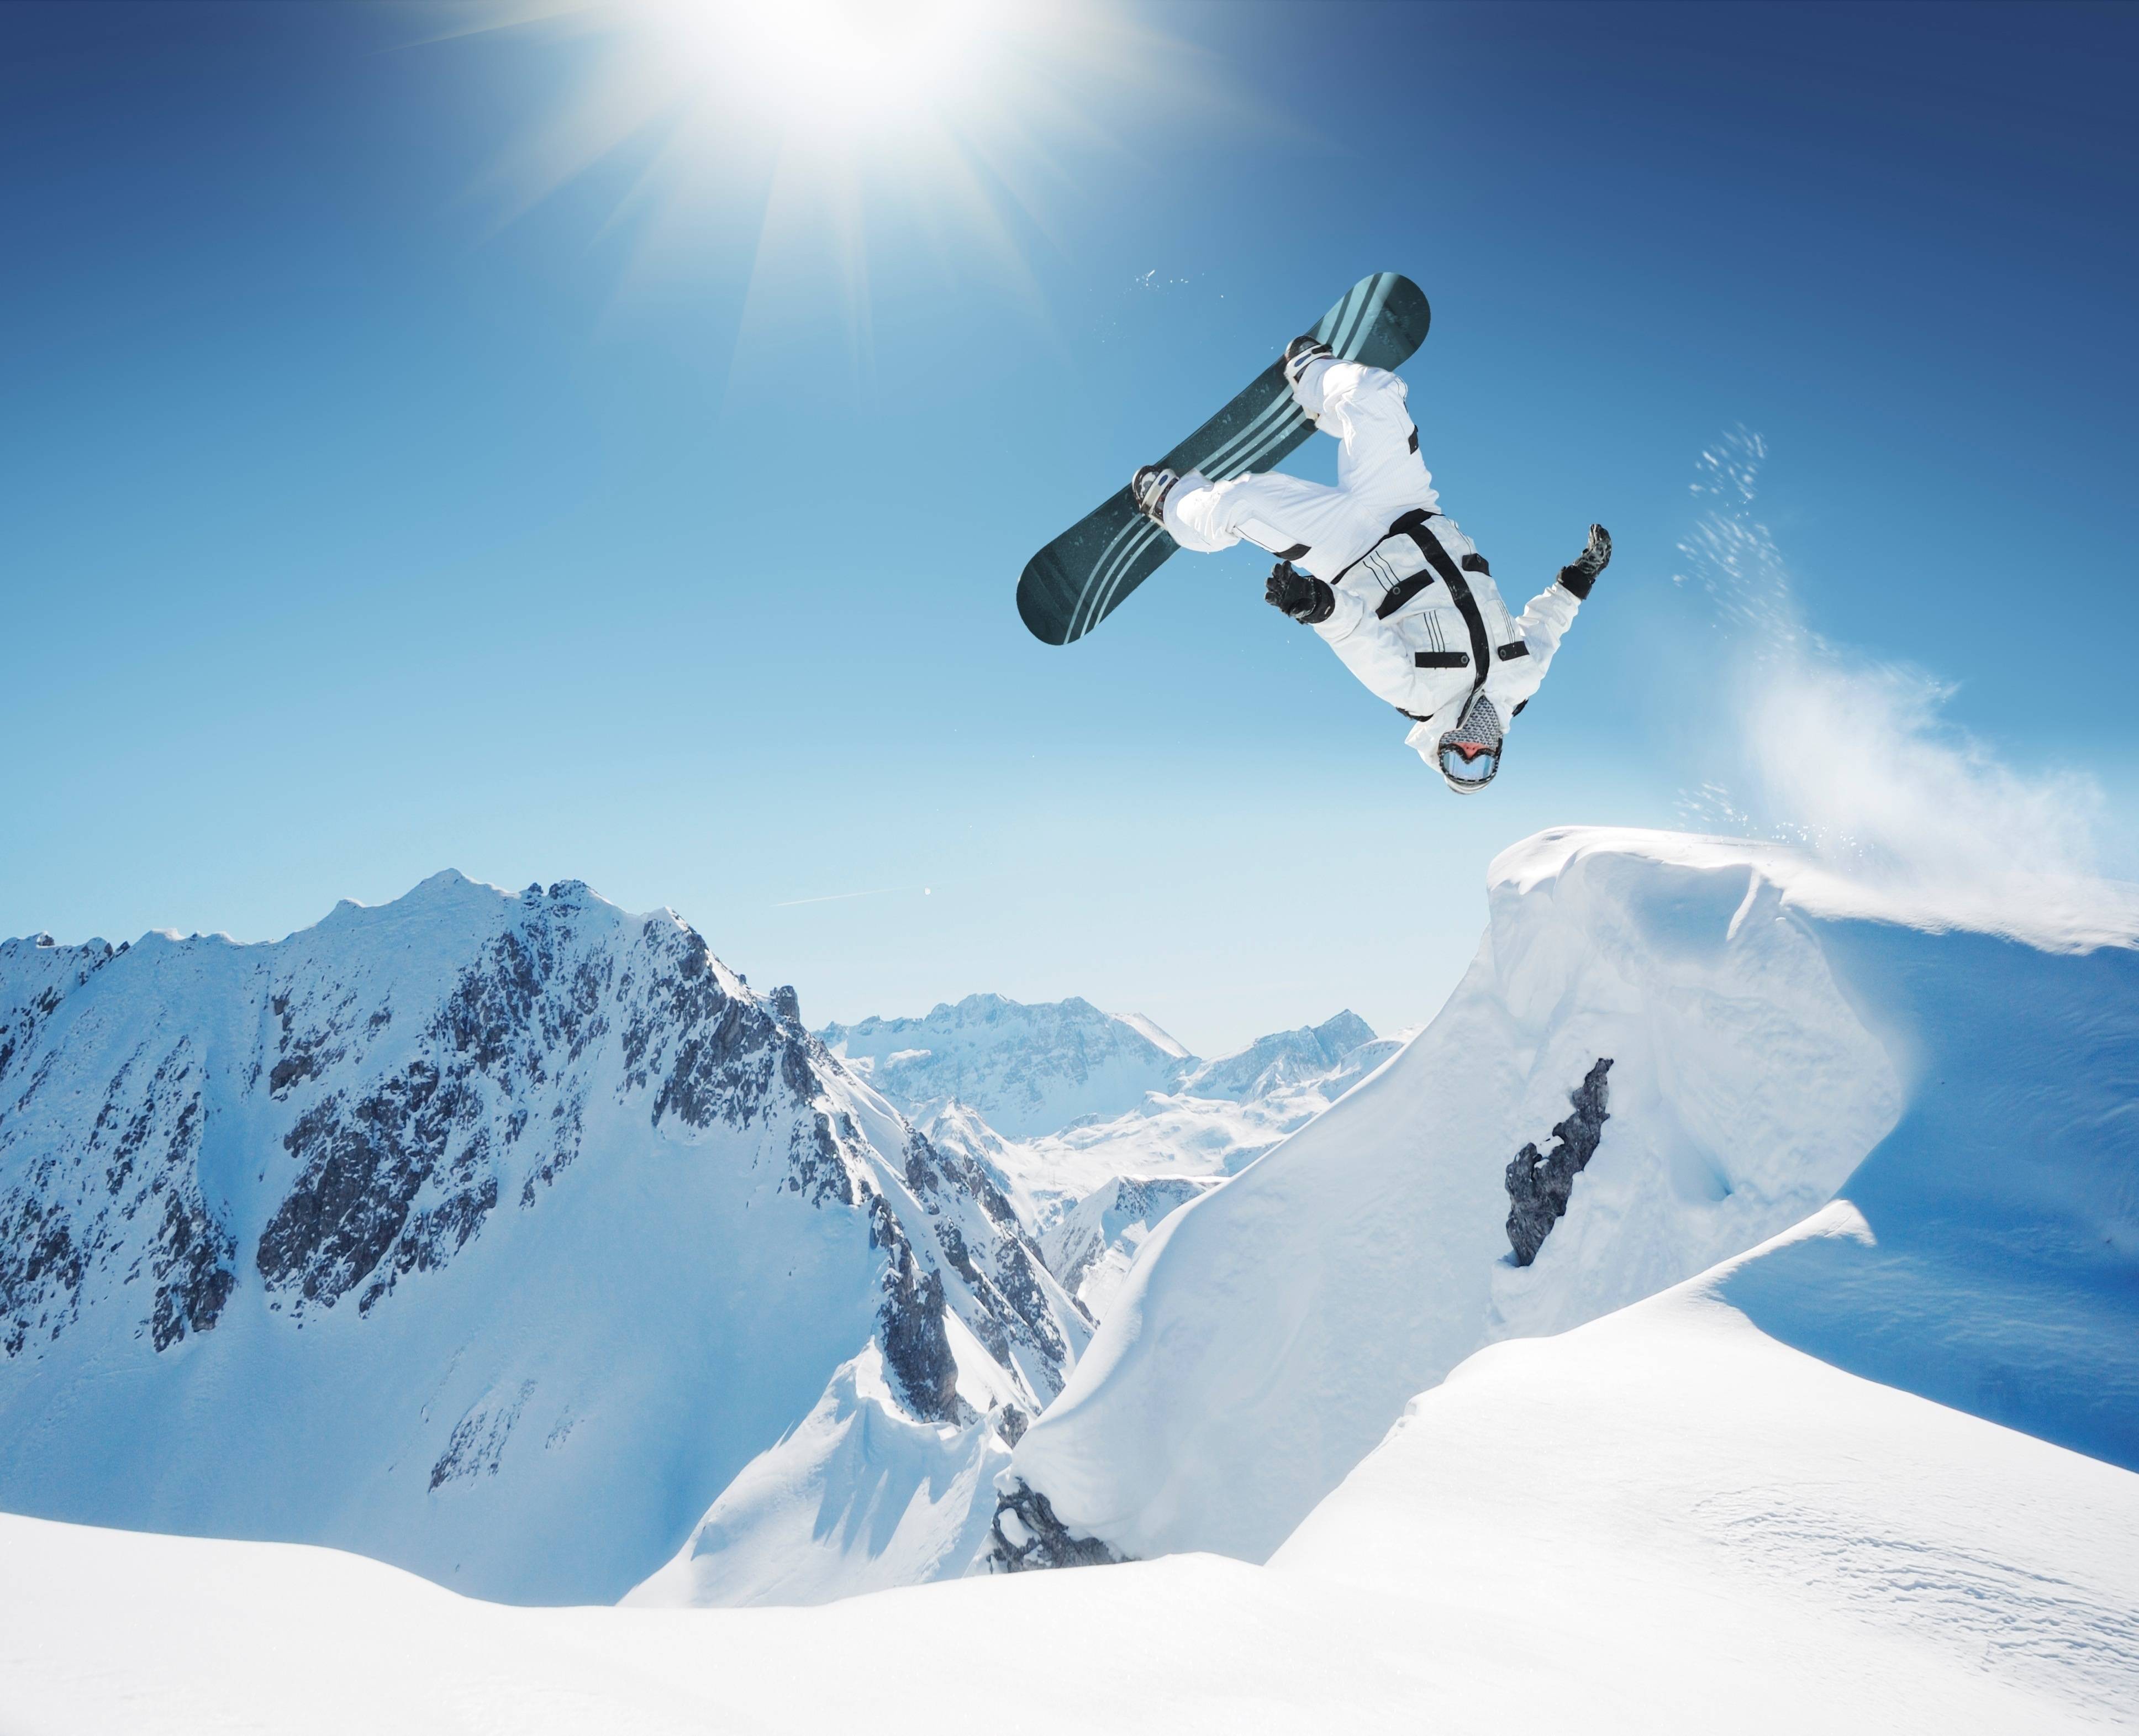 Snowboarding Desktop Wallpaper FREE on Latoro.com